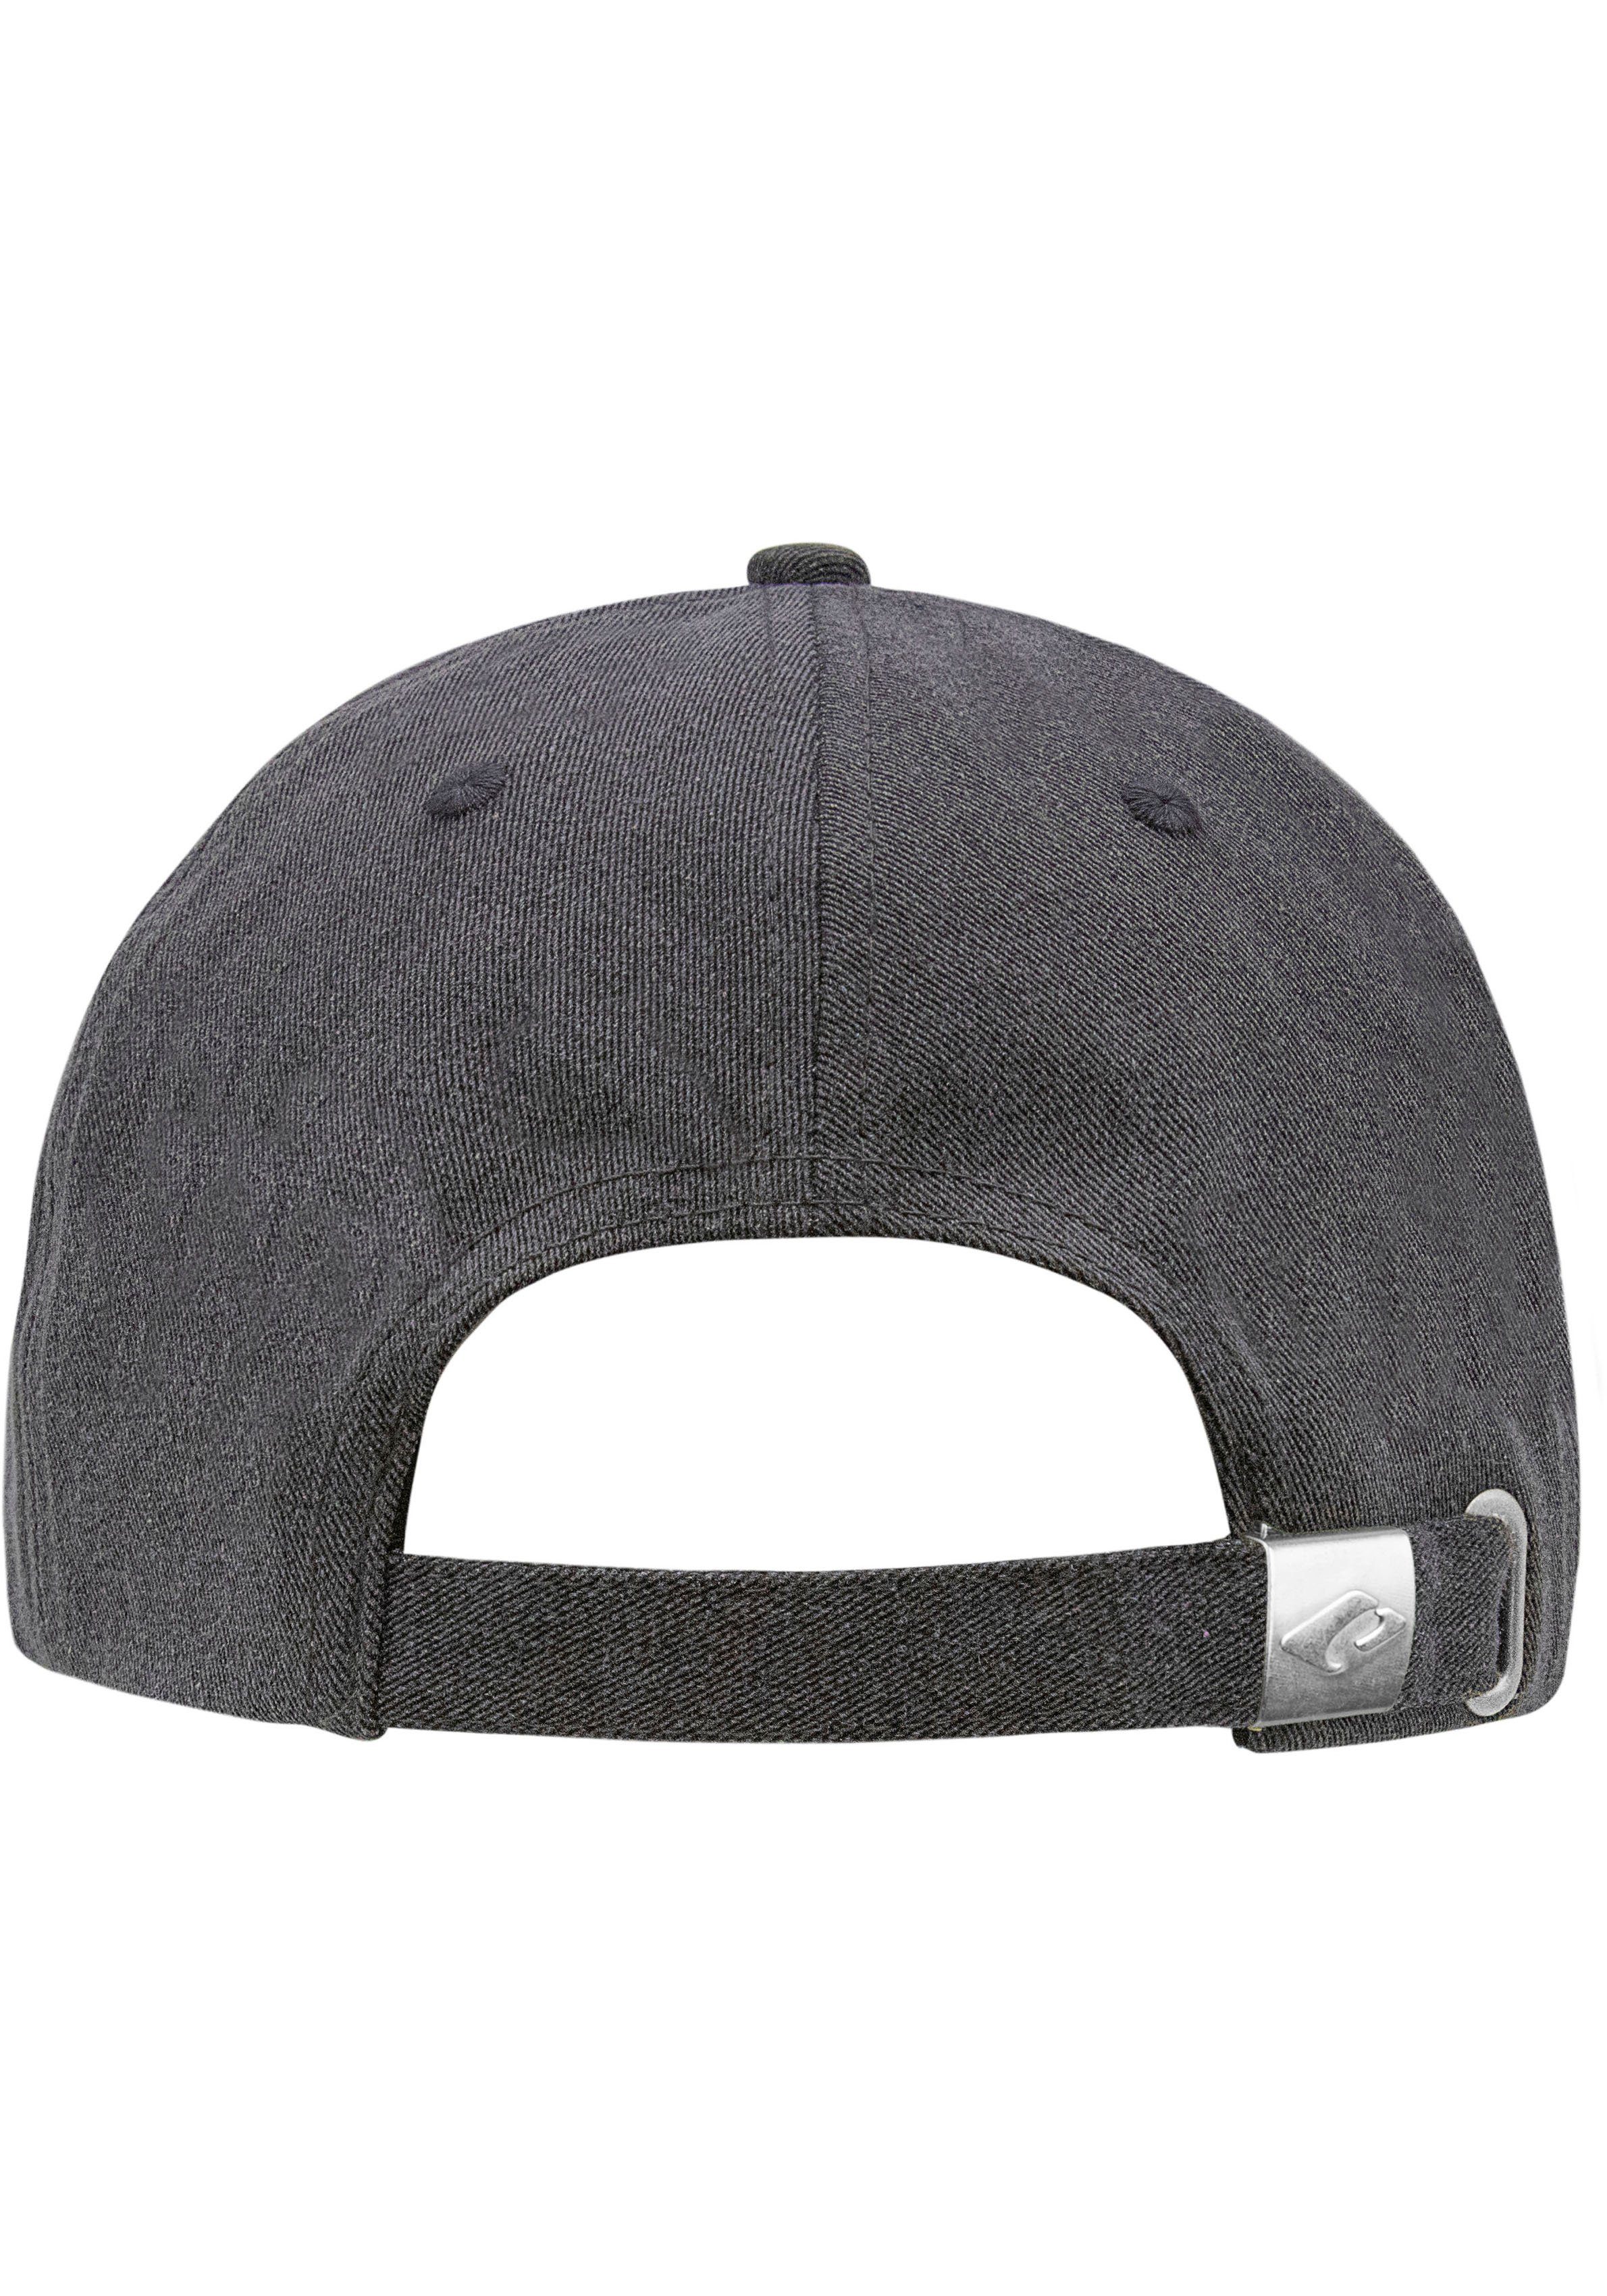 chillouts Baseball Arklow Cap dunkelgrau Hat